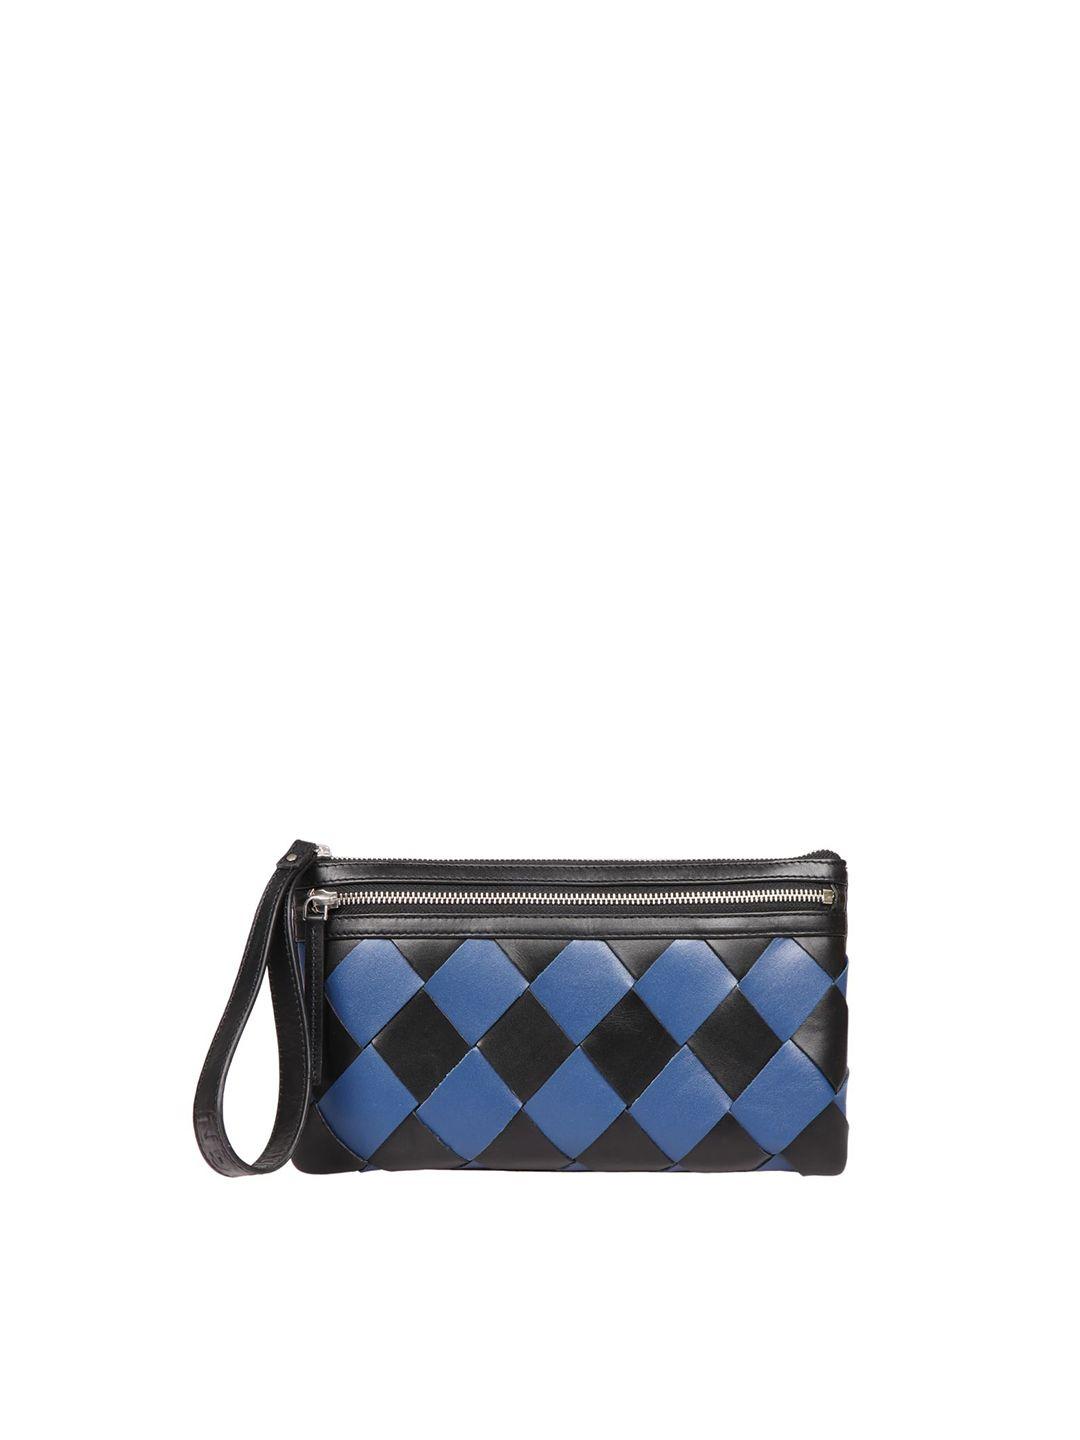 hidesign women colourblocked purse clutch